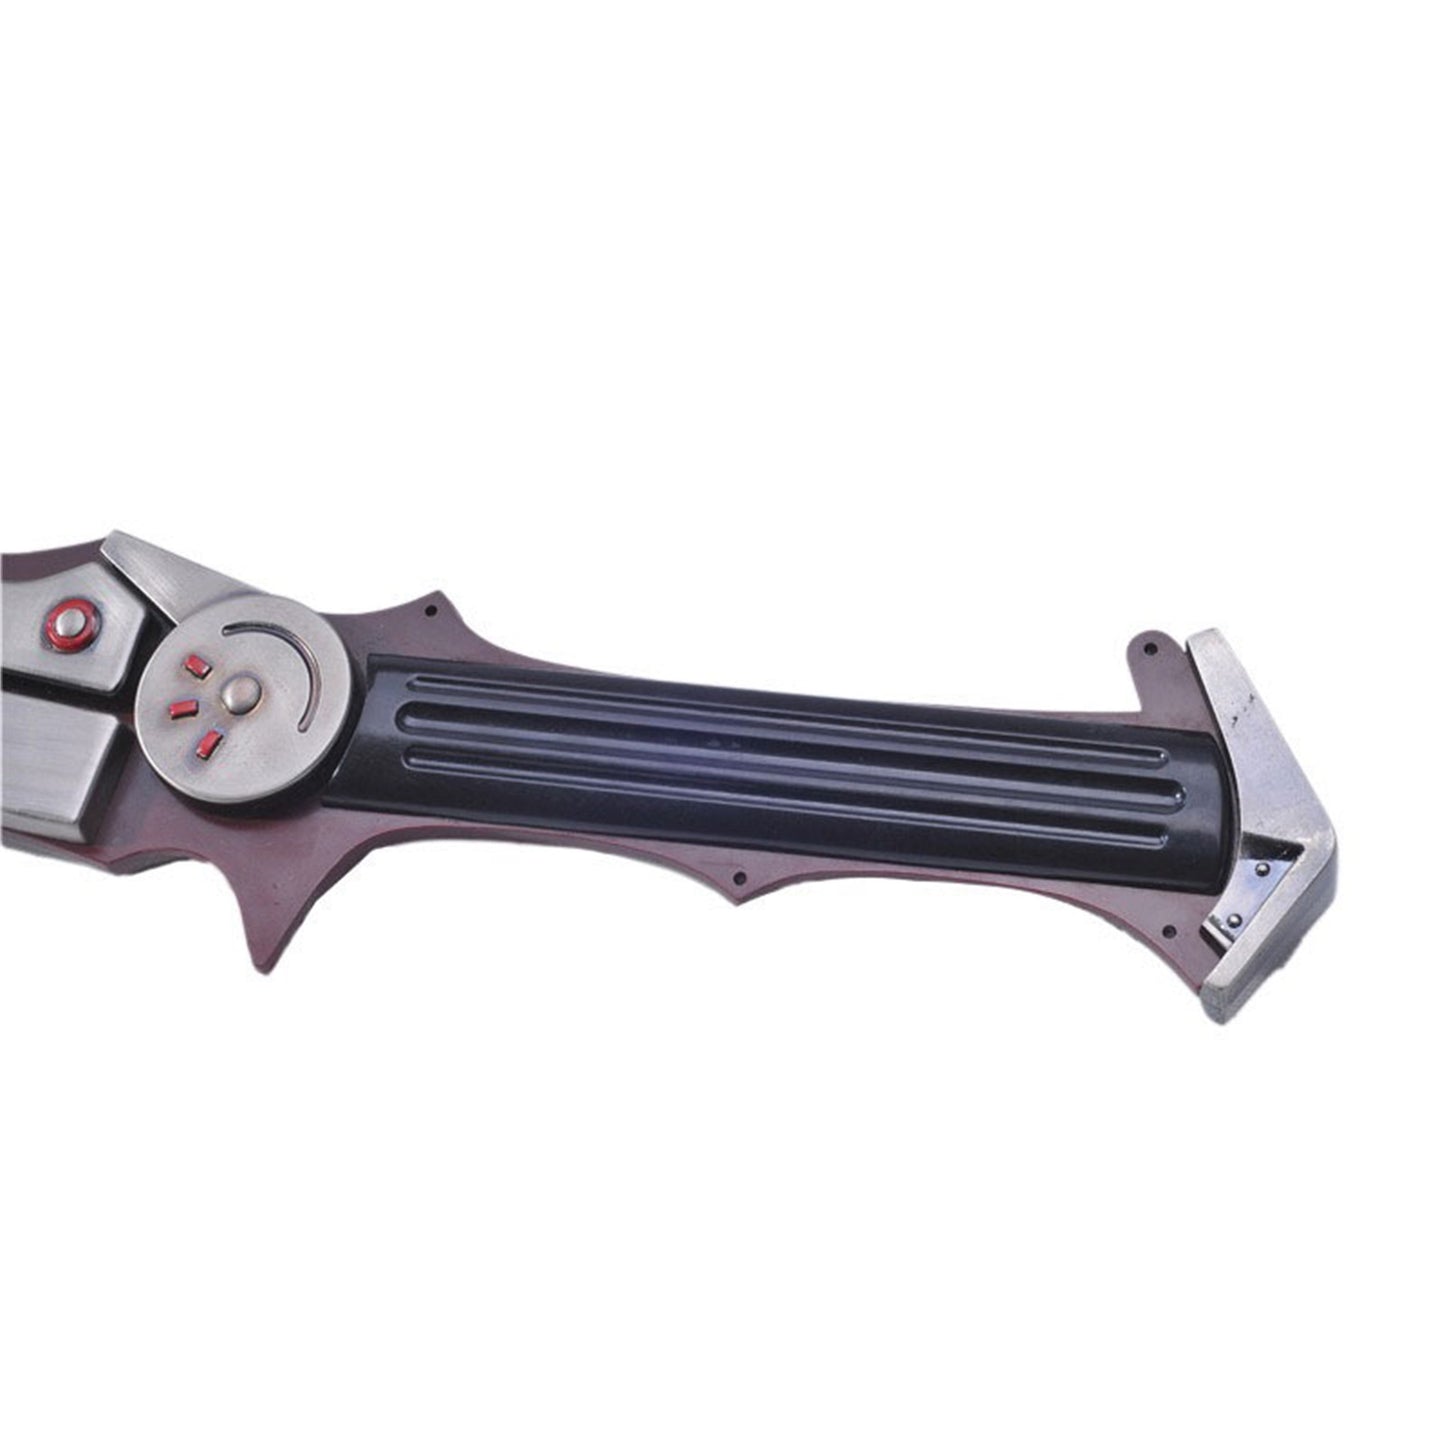 Blazefire Saber Lightning Gunblade Life-size Metal Replica Cosplay Prop